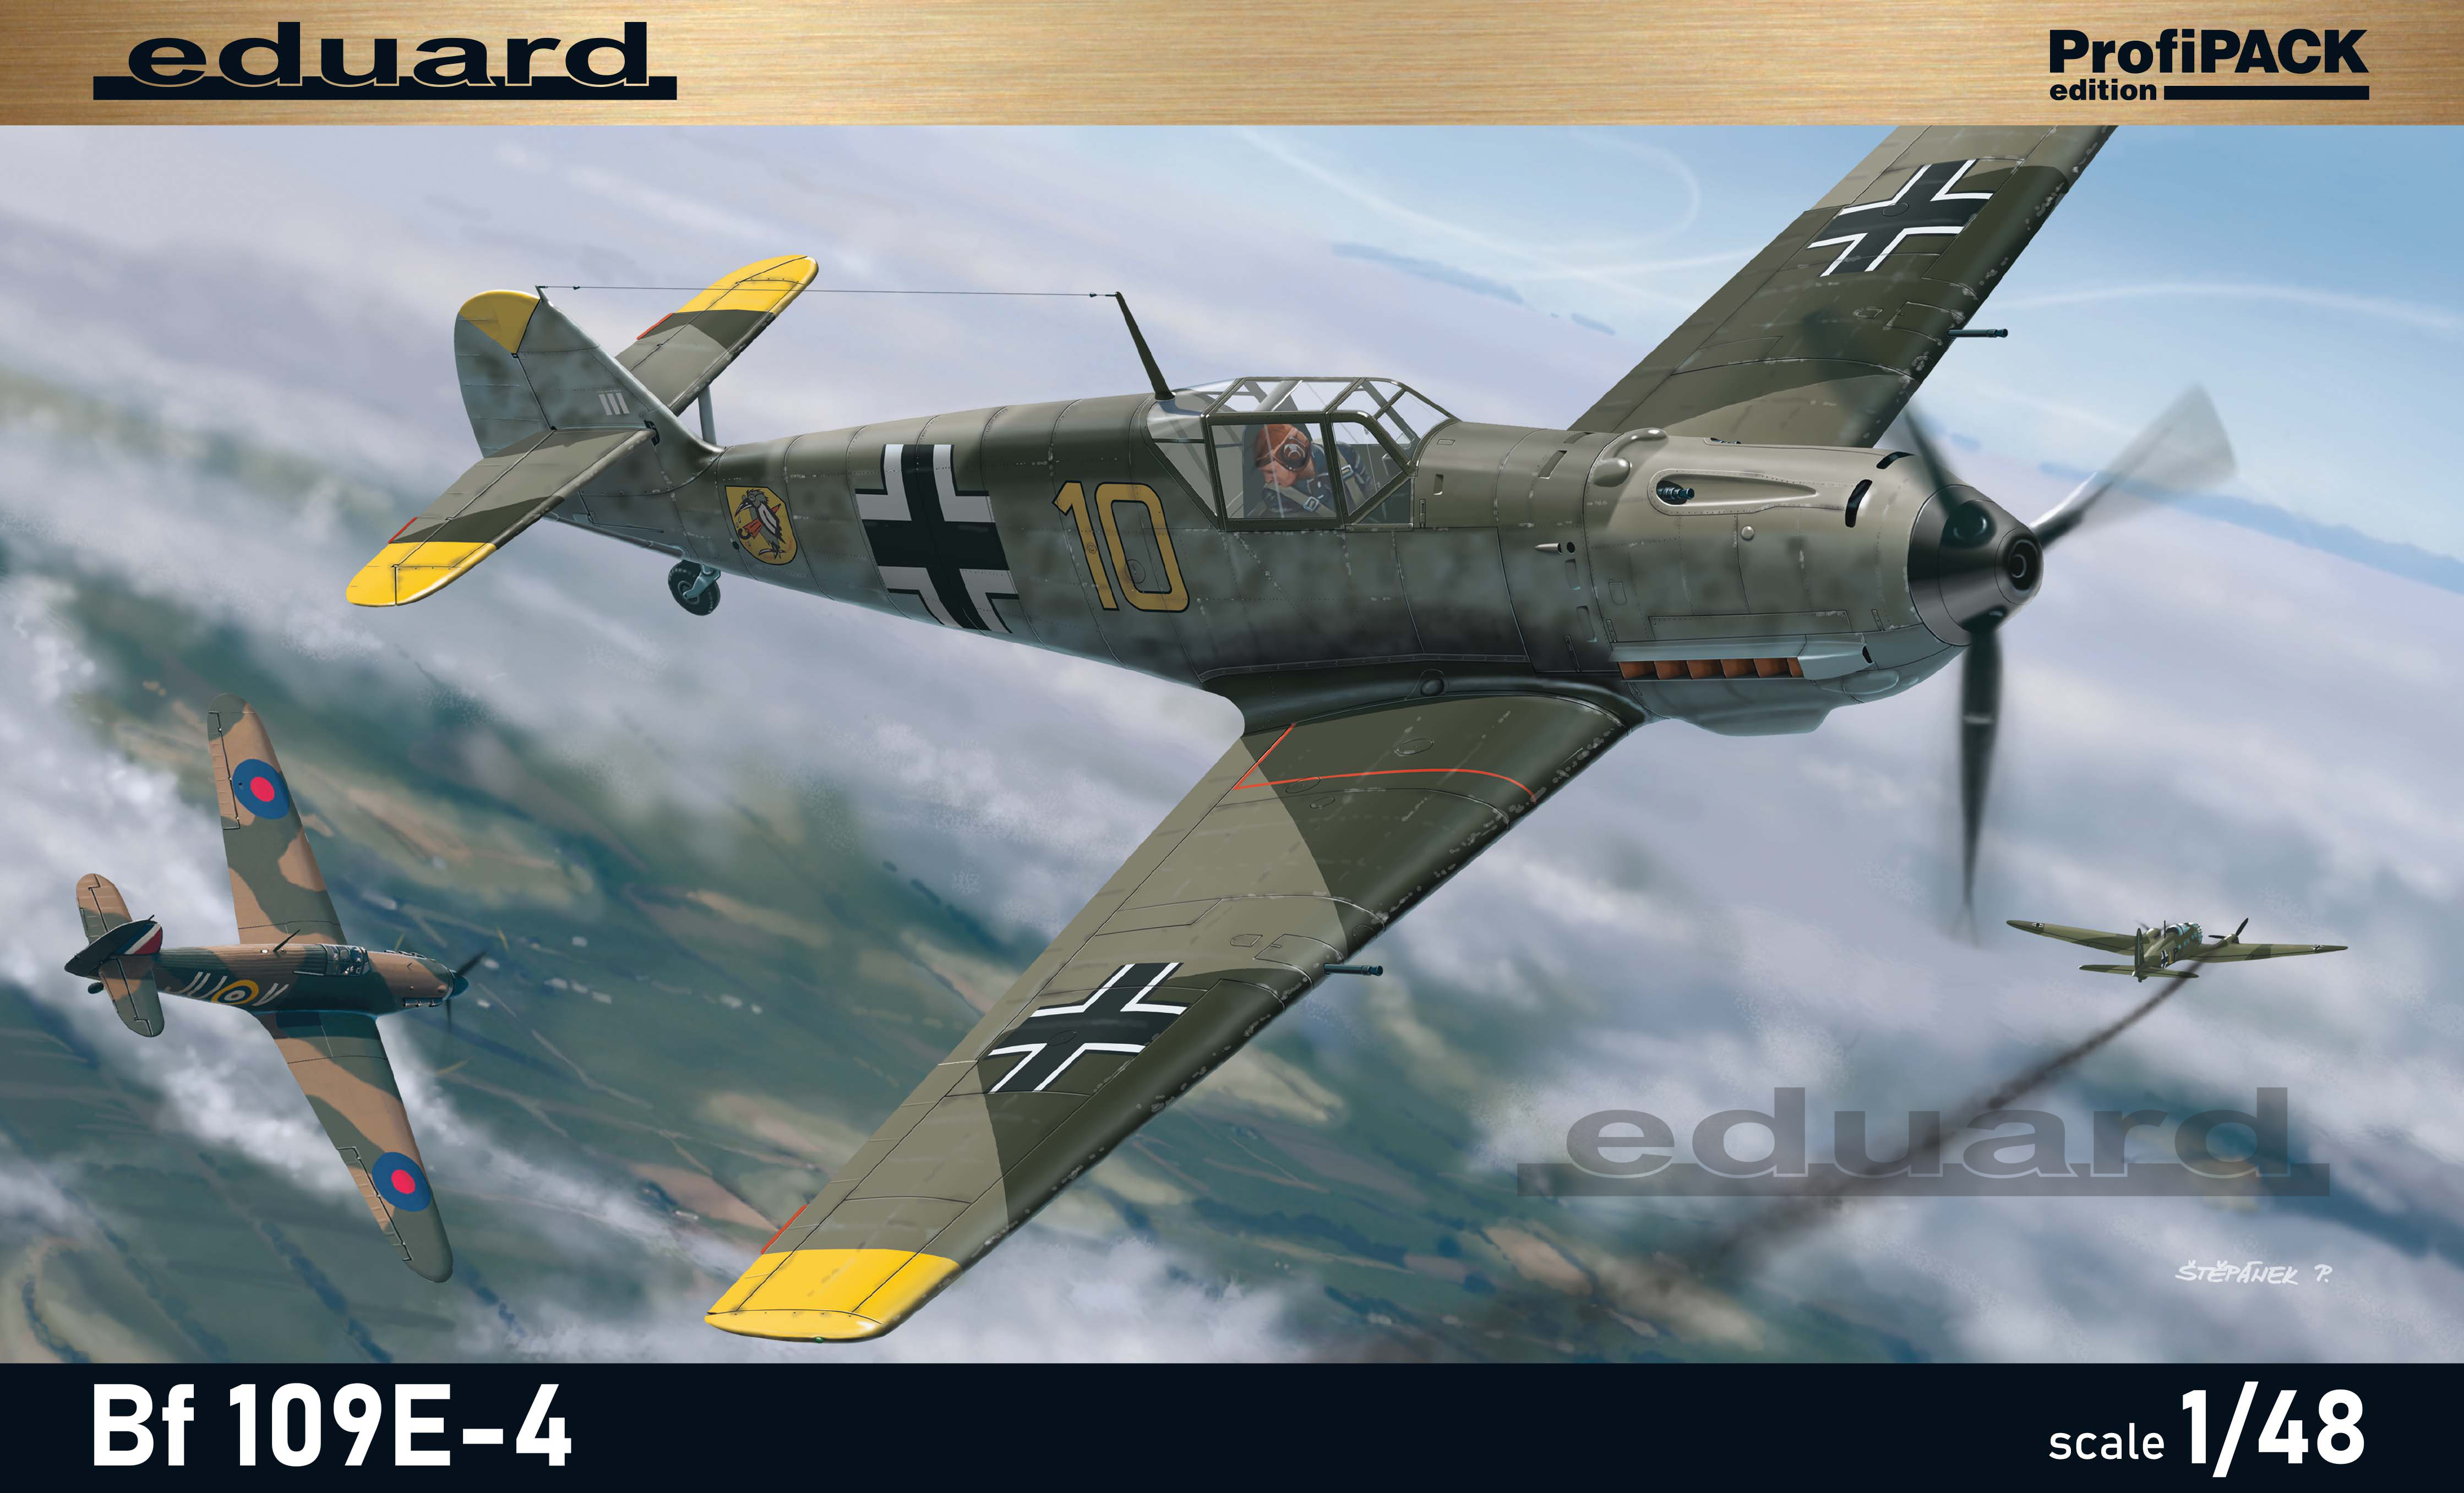 Model kit 1/48Messerschmitt Bf-109E-4 ProfiPACK edition (Eduard kits)